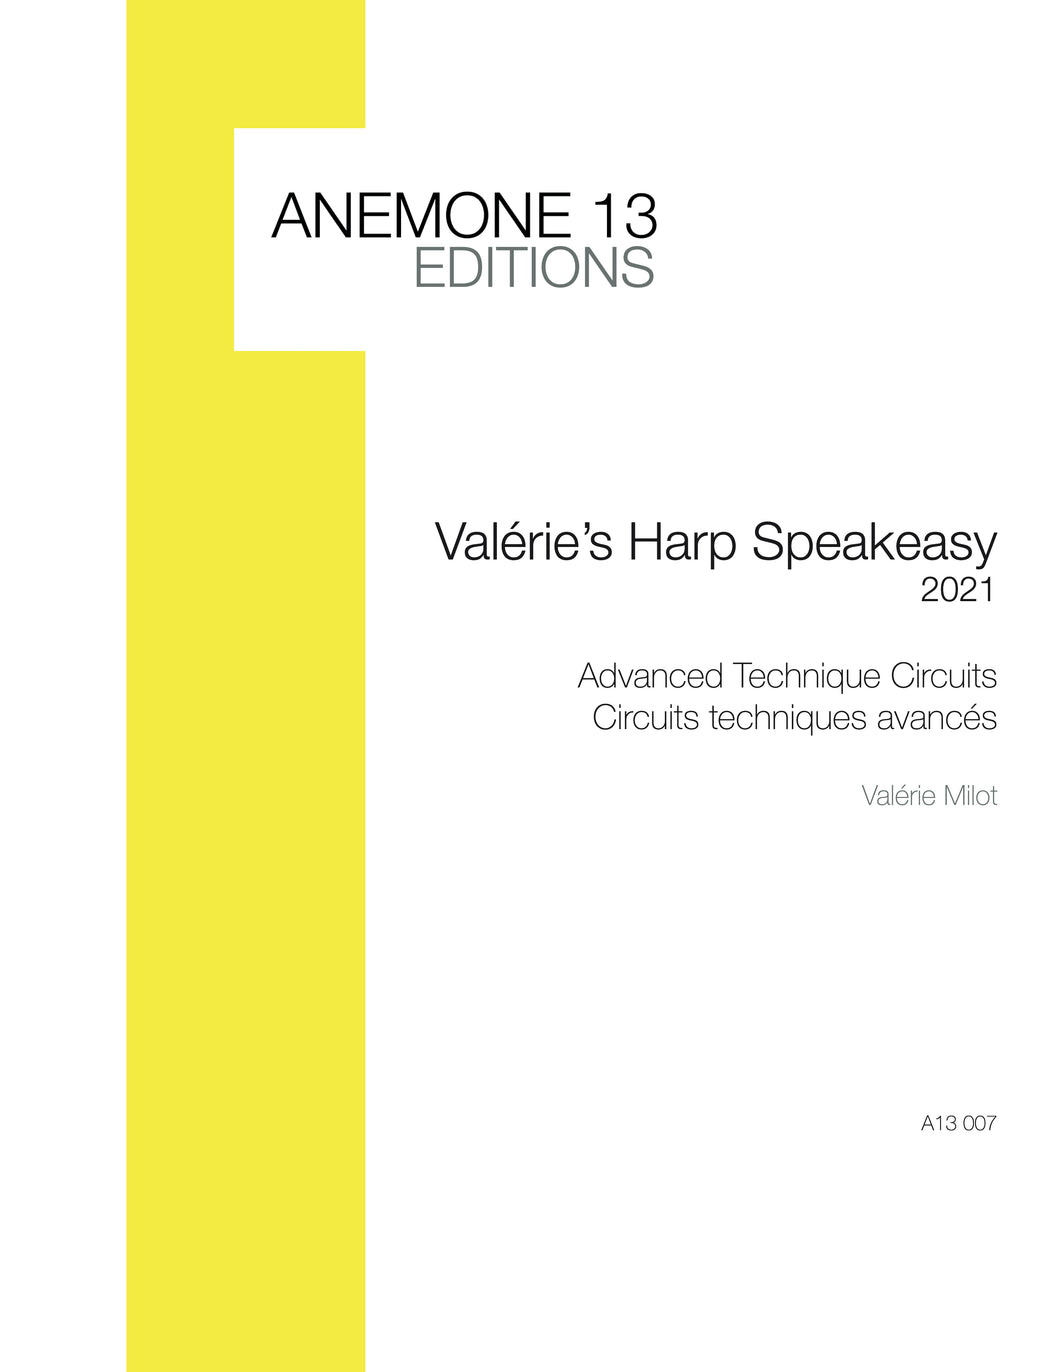 Advanced Technique Circuits - Valérie's Harp Speakeasy 2021